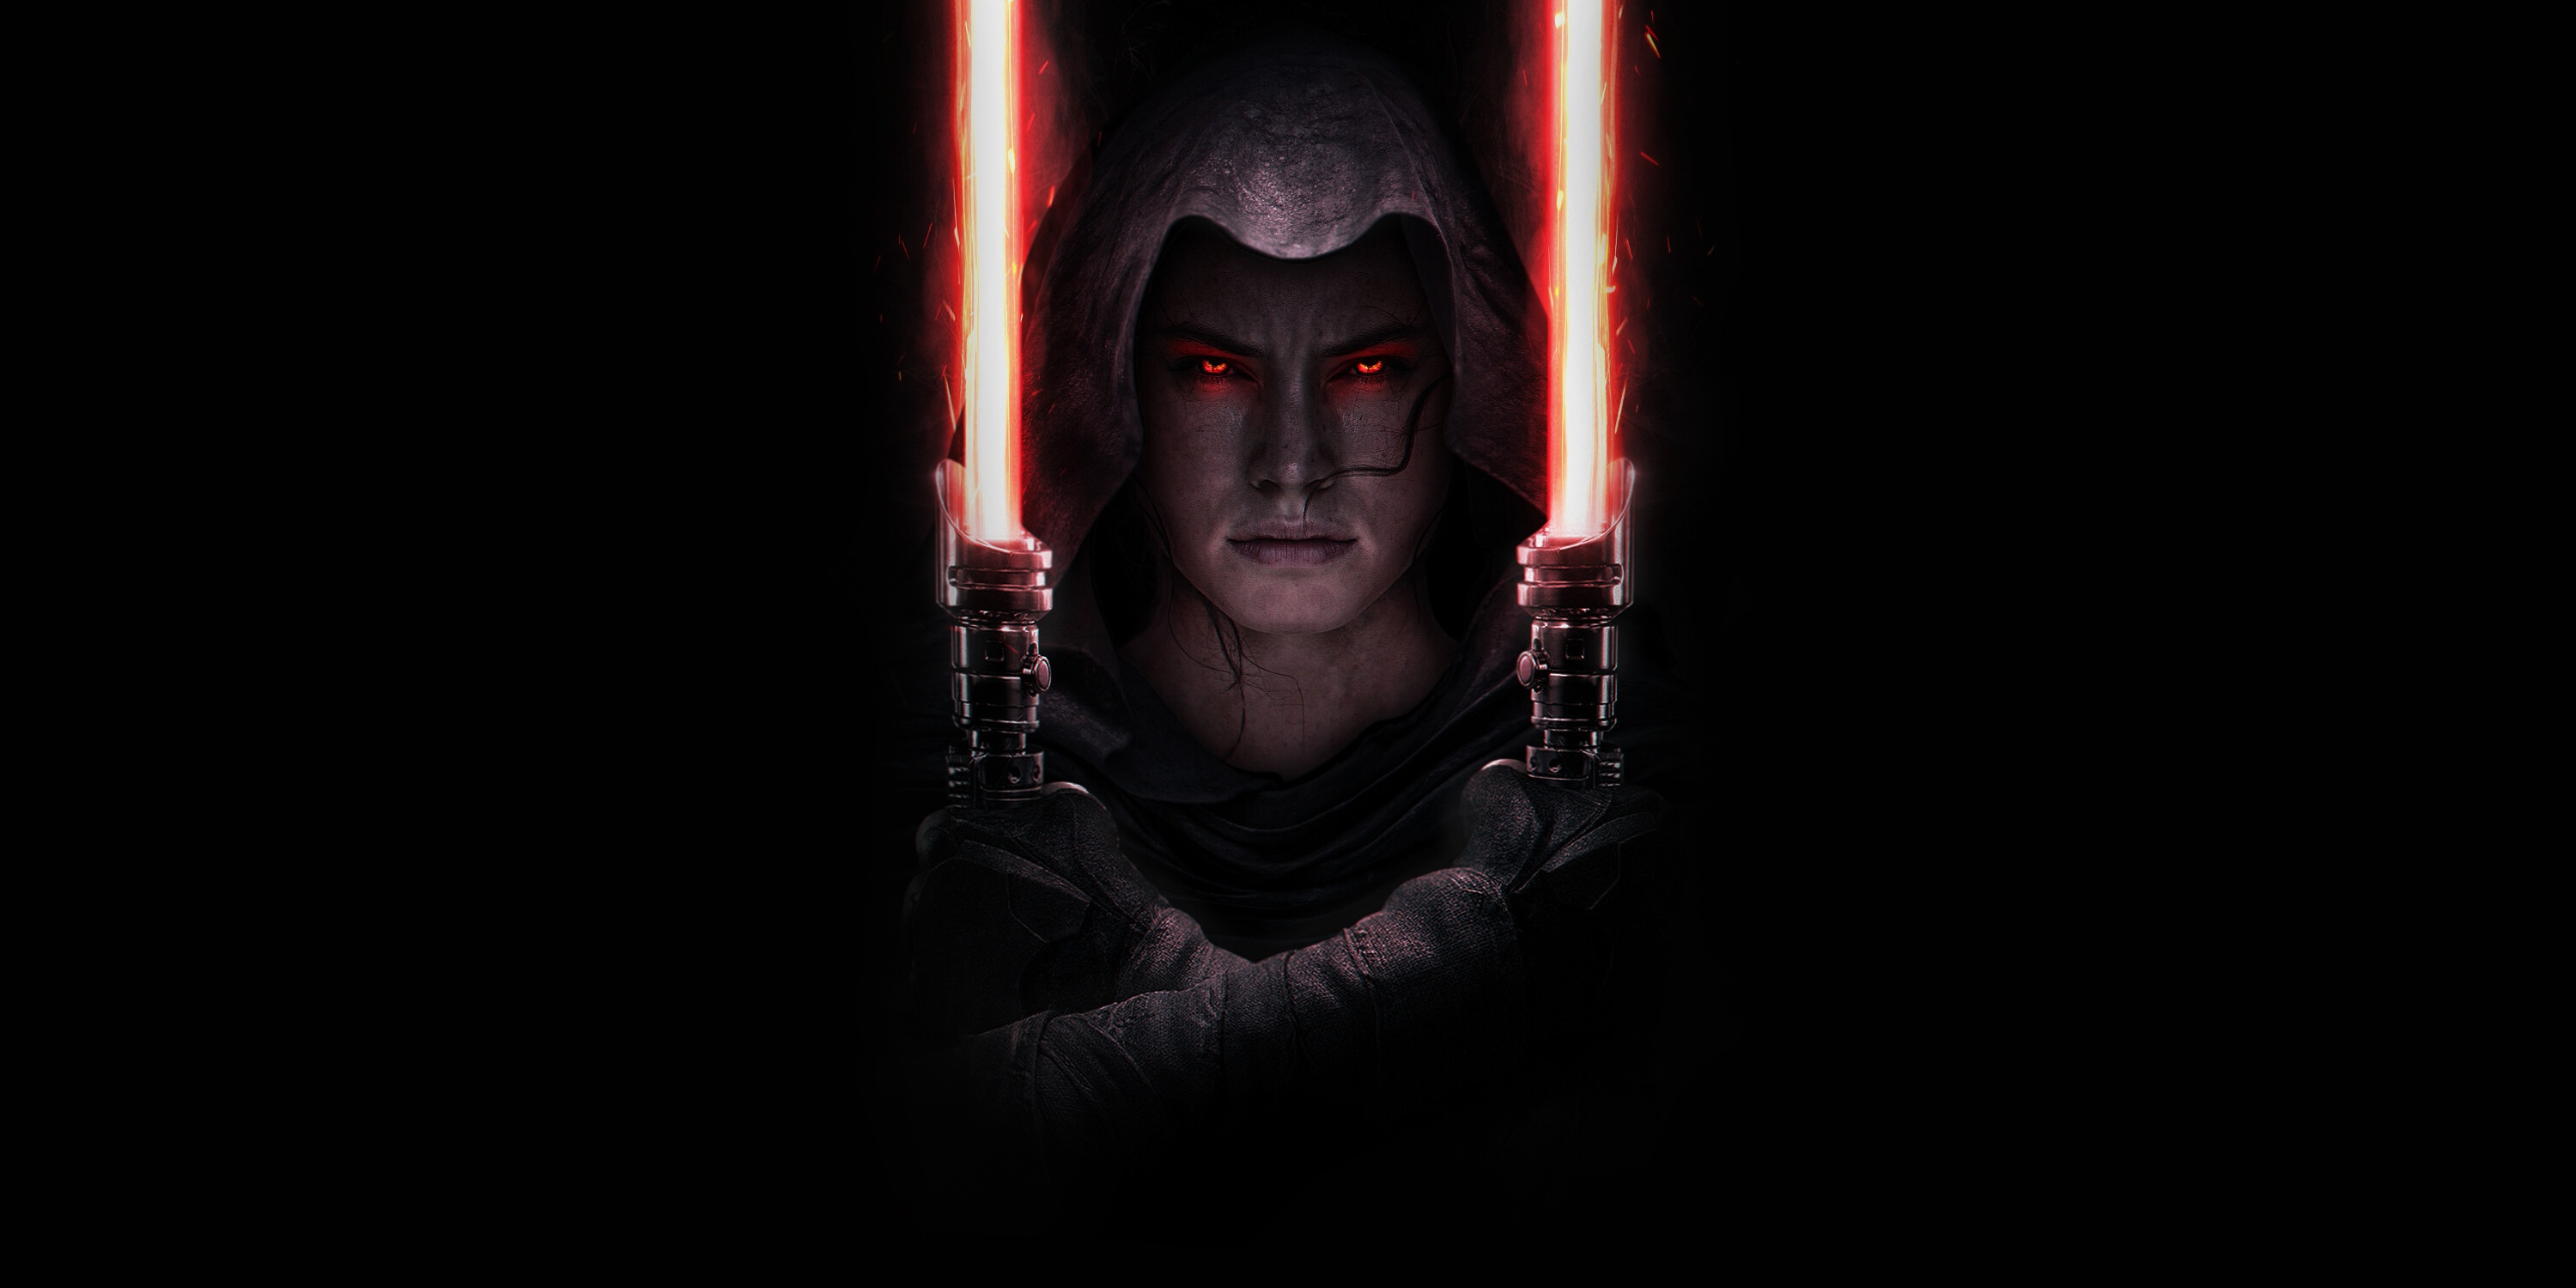 General 3000x1500 Star Wars Sith artwork lightsaber dark side 2019 (year) red eyes Rey (Star Wars) Star Wars: The Force Unleashed Star Wars: Episode IX - The Rise of Skywalker